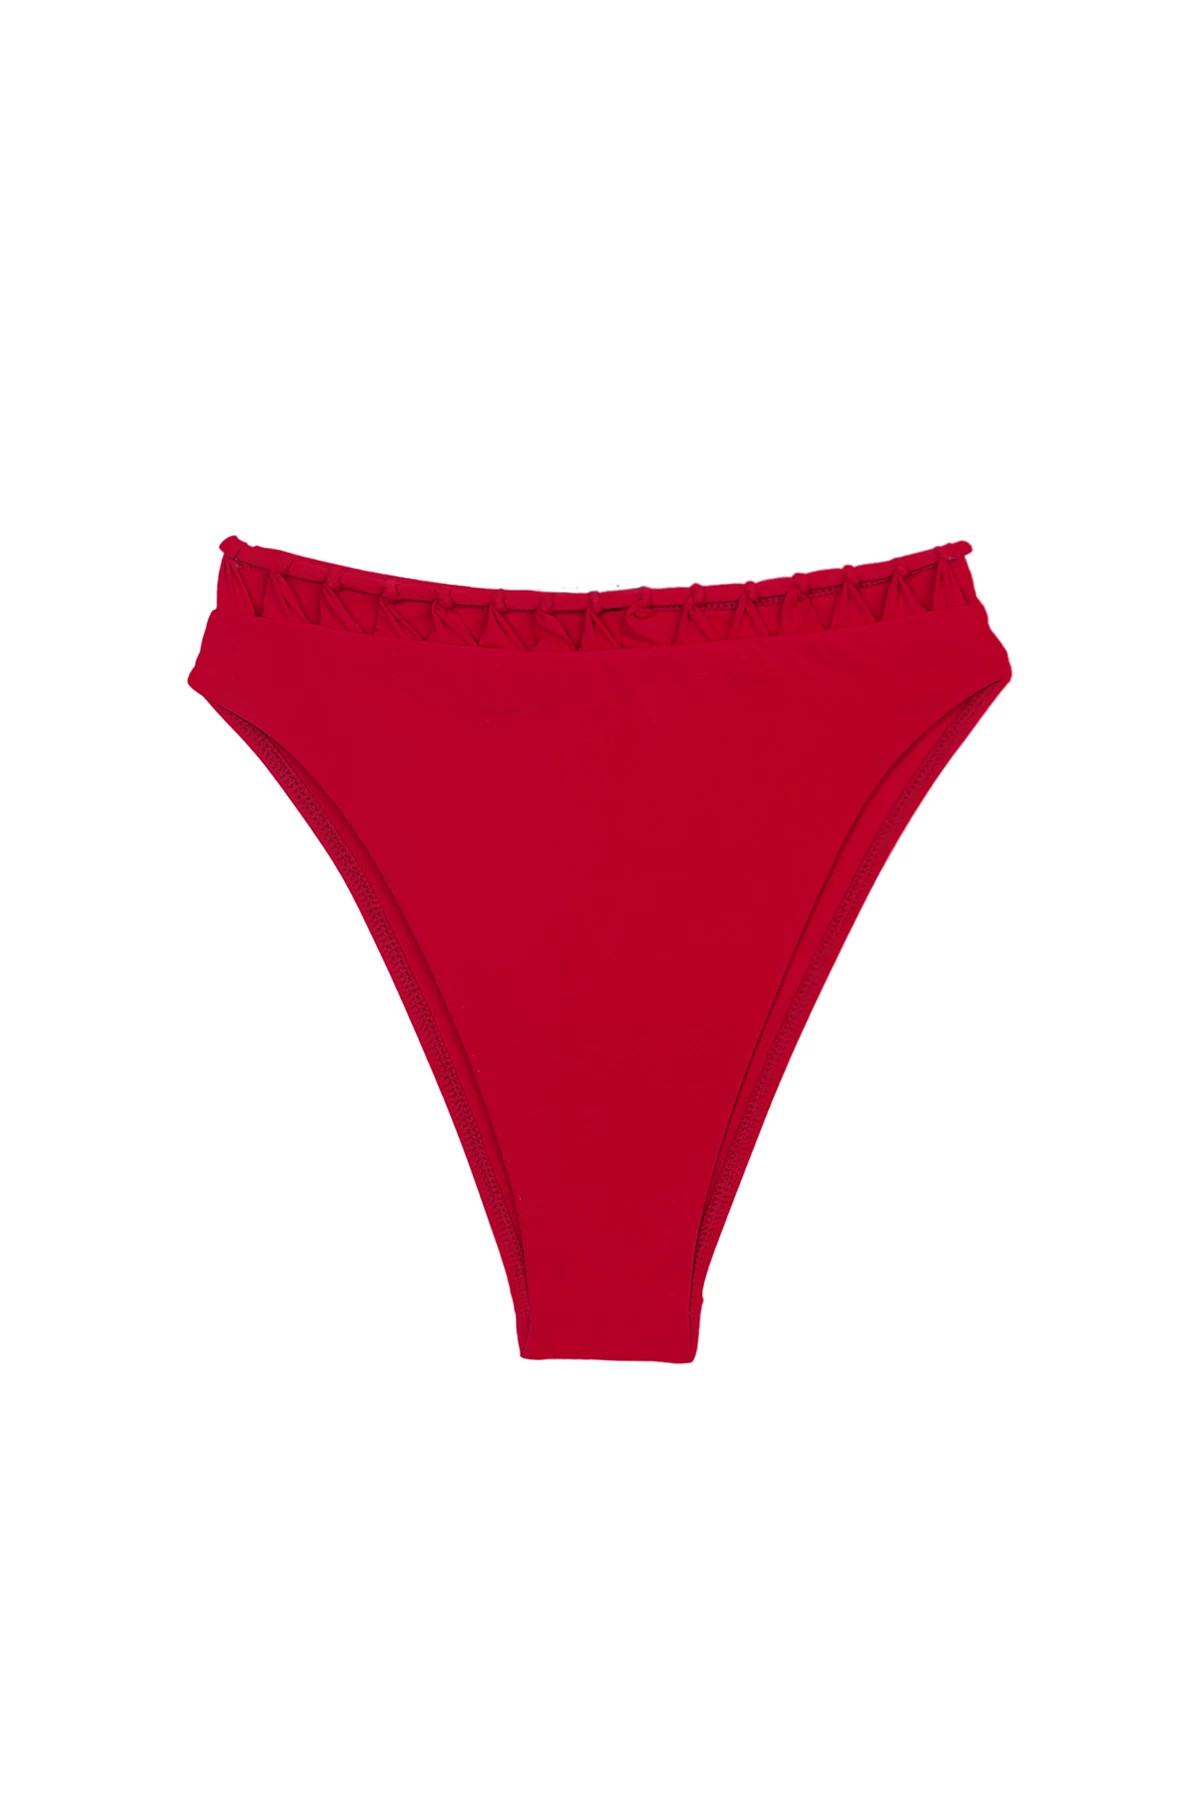 AMBRA RED Leeza Banded High Waist Bikini Bottom image number 3